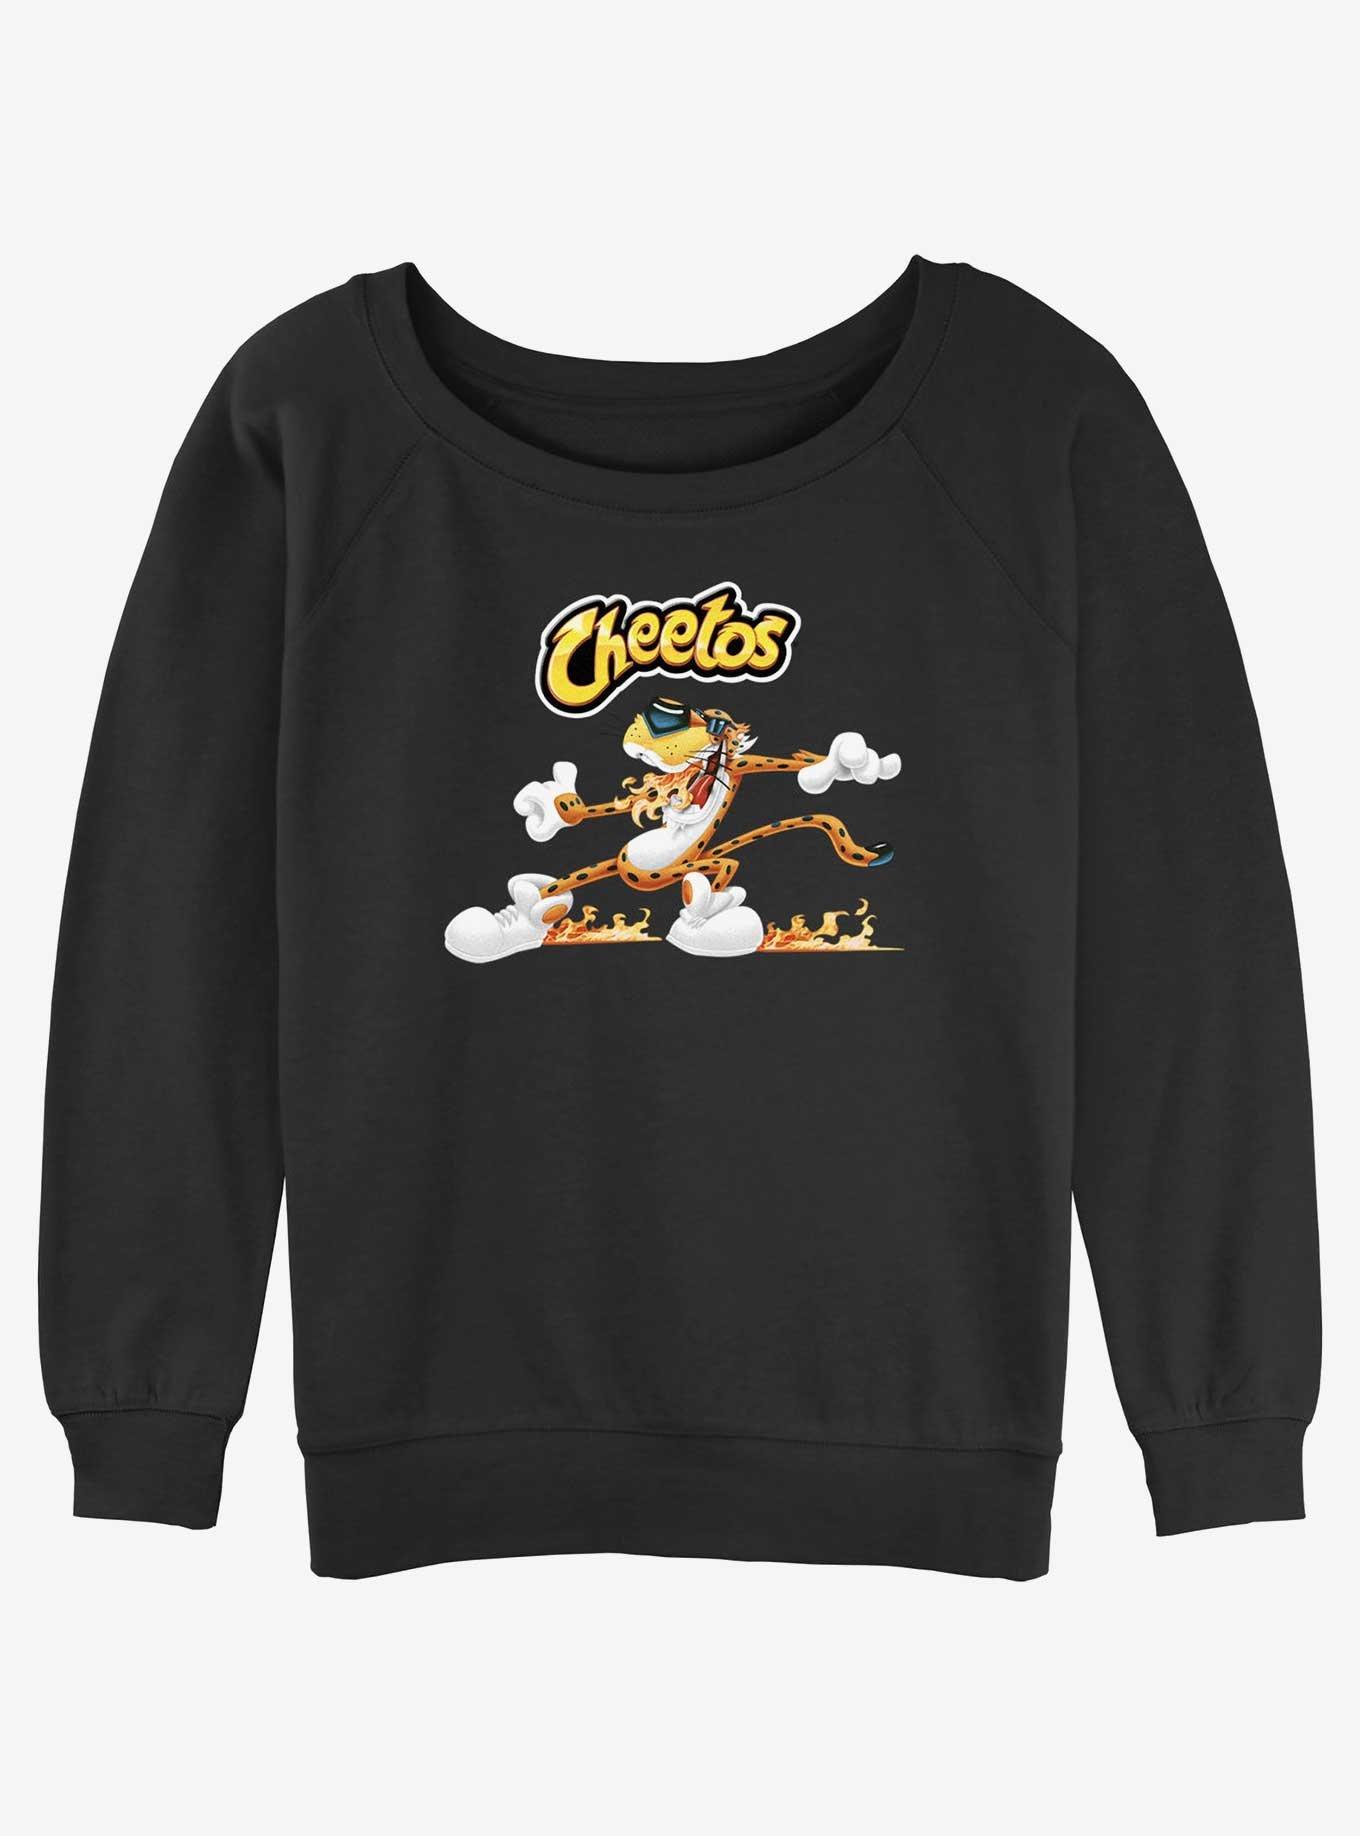 Cheetos Chester Run Spin Girls Slouchy Sweatshirt, BLACK, hi-res